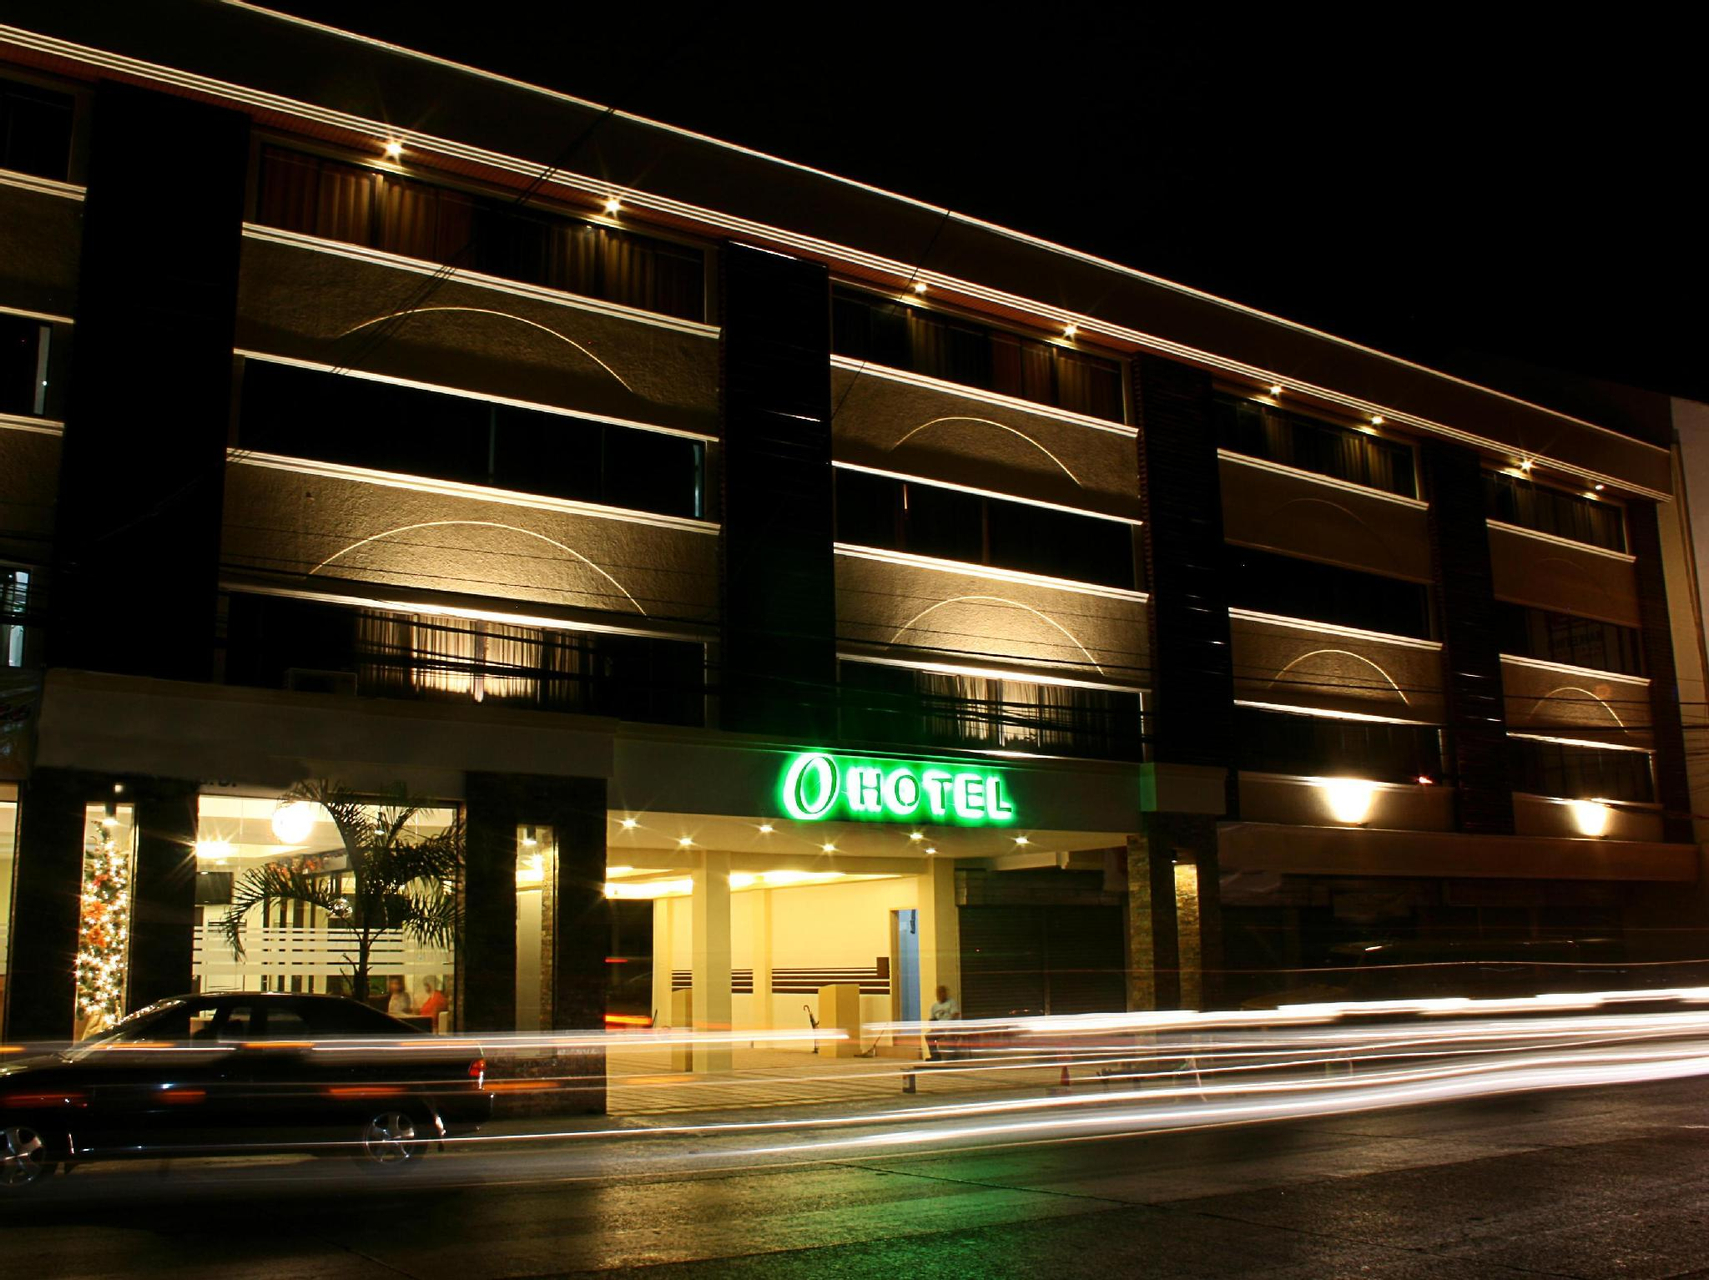 OHotel, Bacolod City